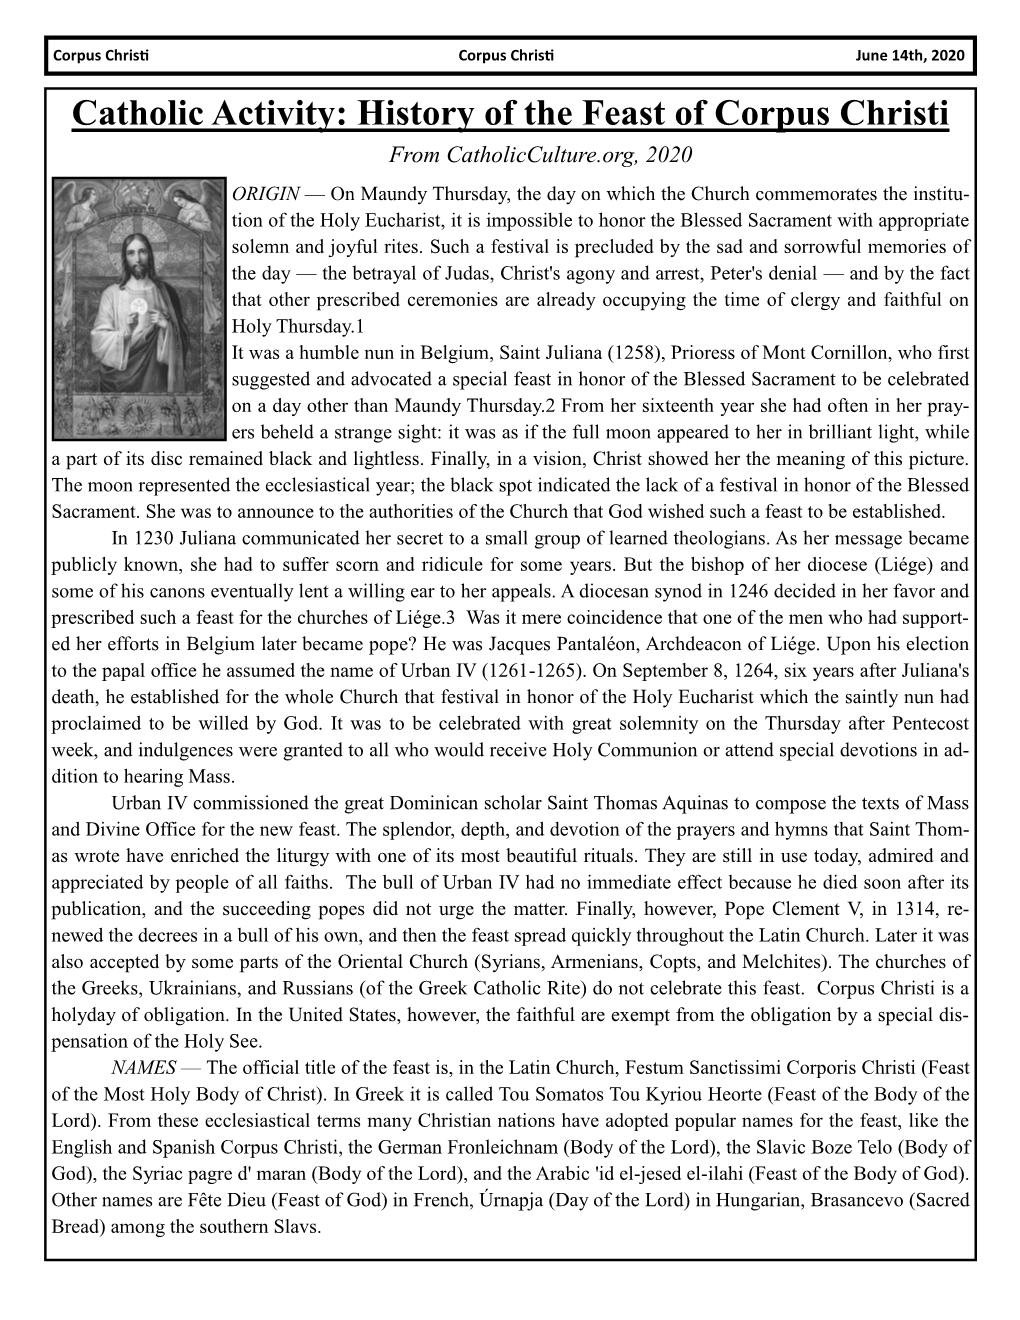 History of the Feast of Corpus Christi